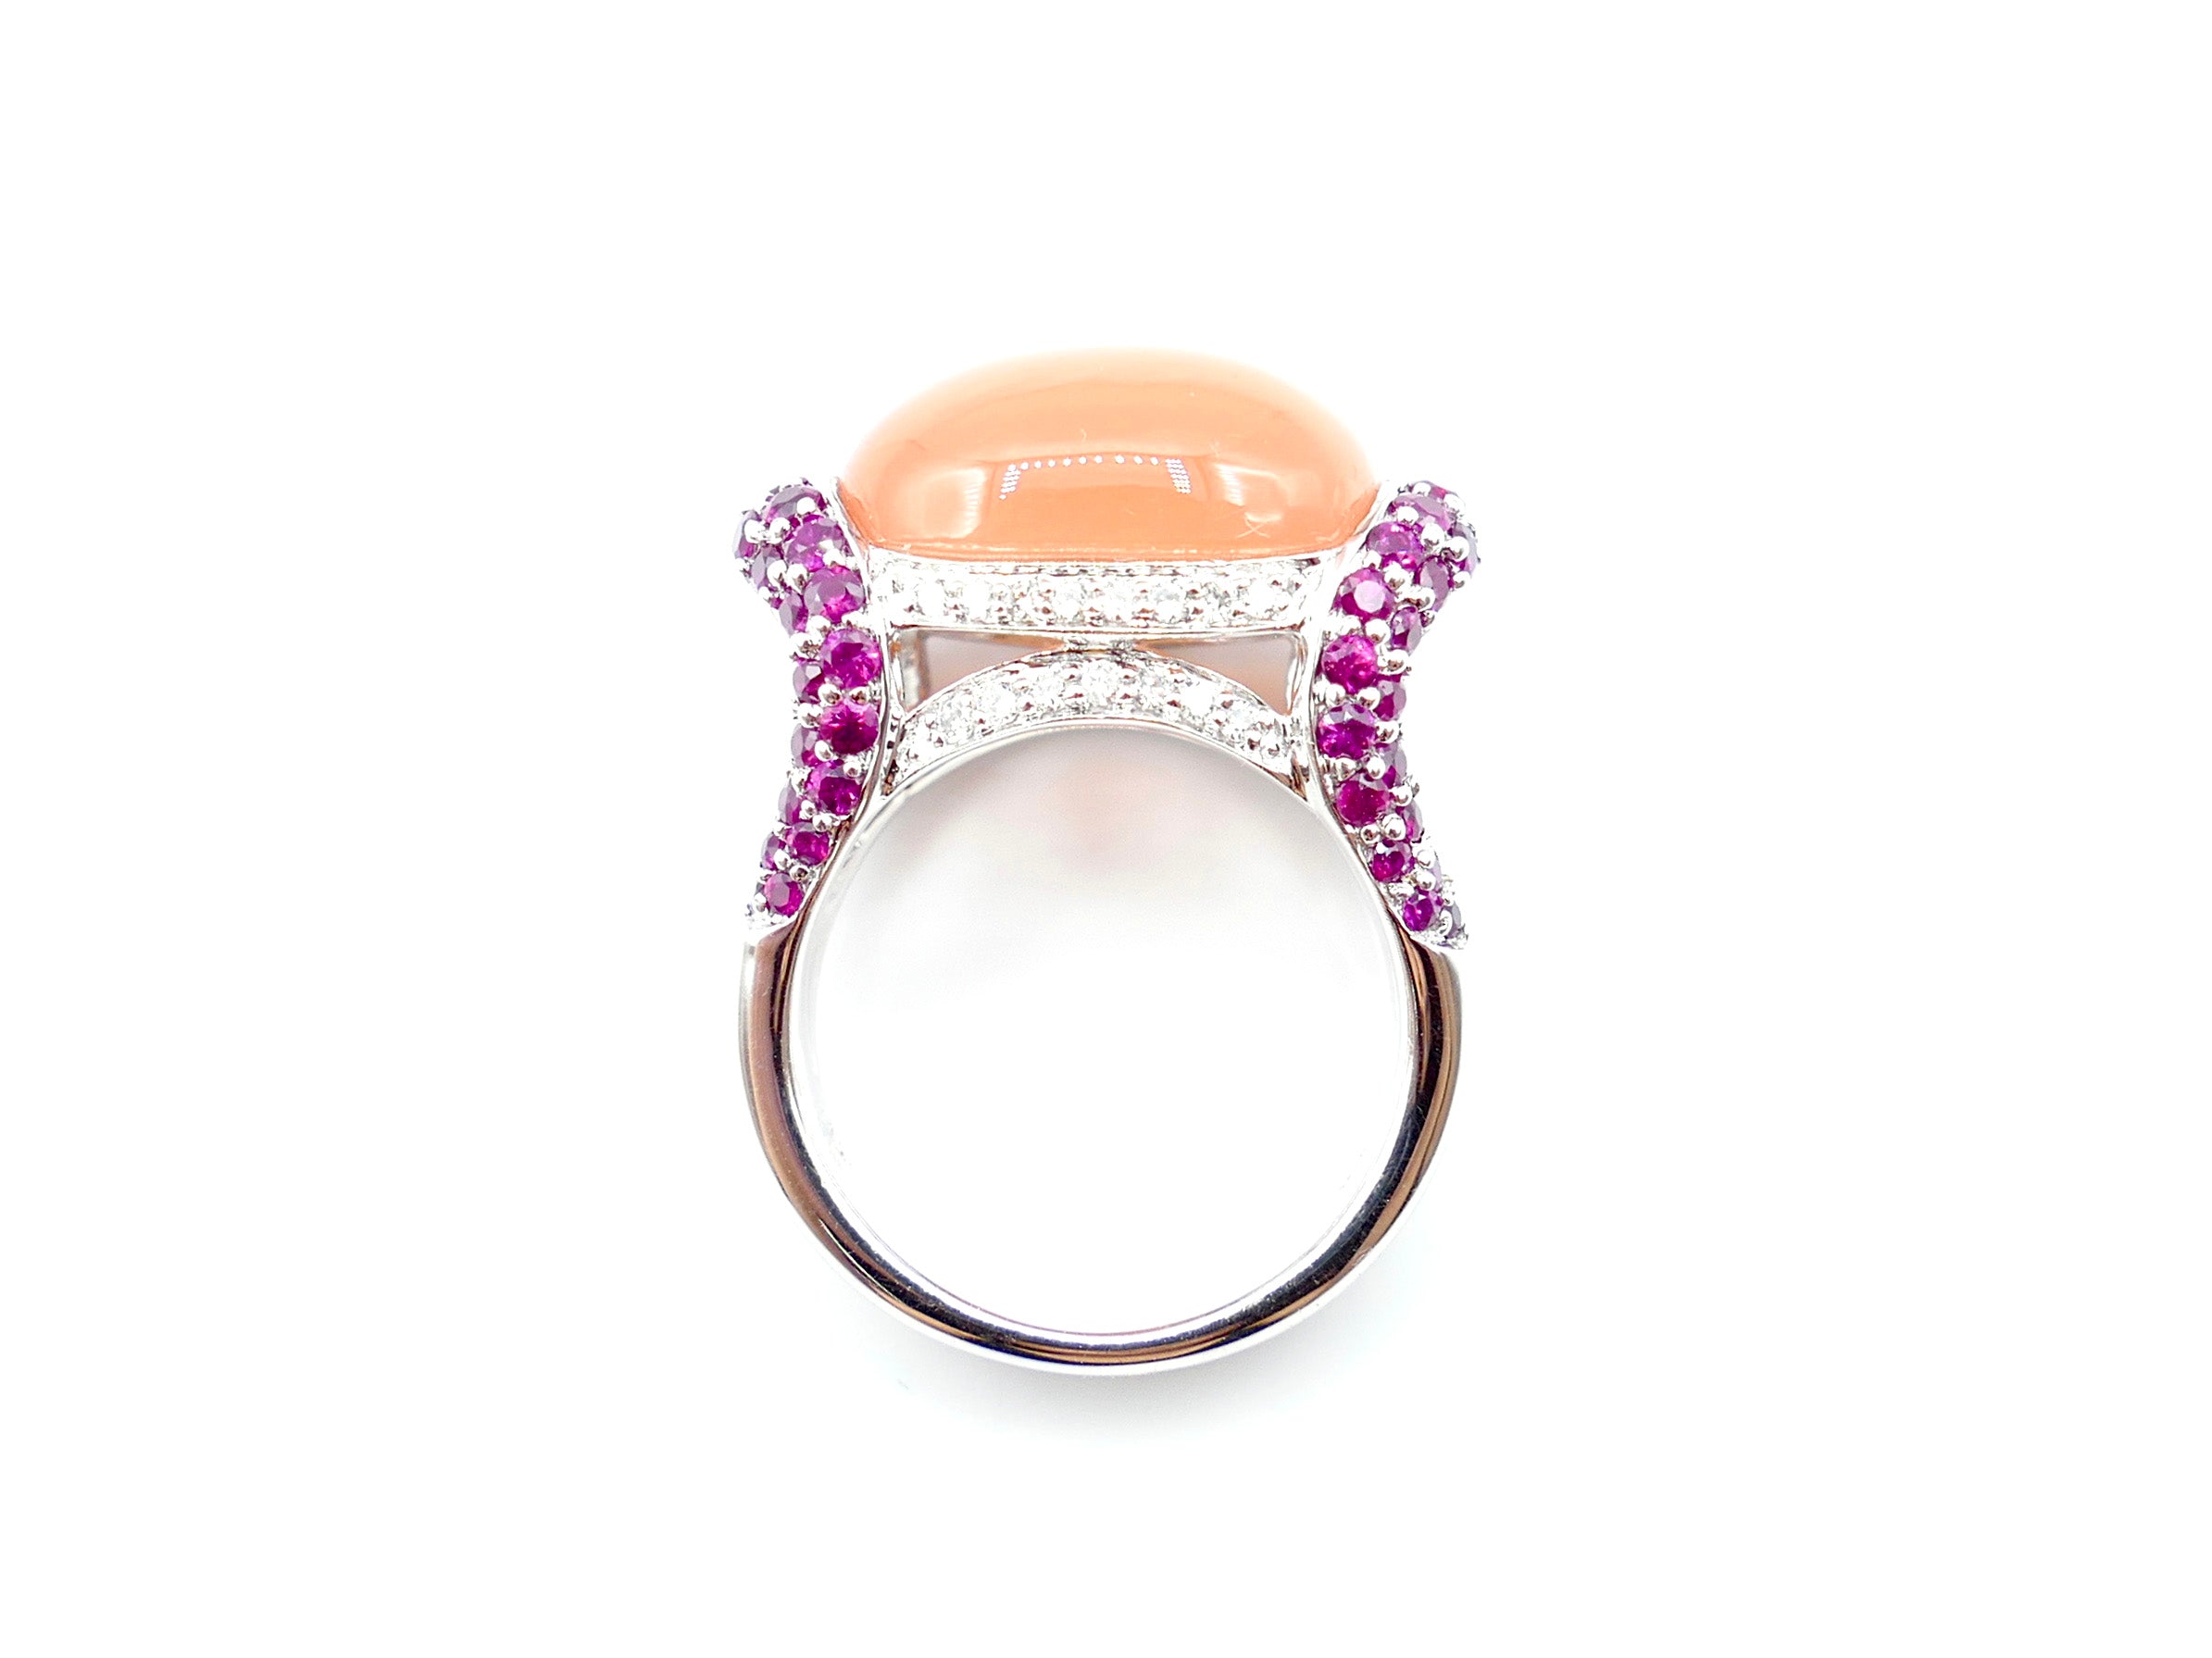 Peach Carnelian with Pave Set Rubies and Diamonds Ring